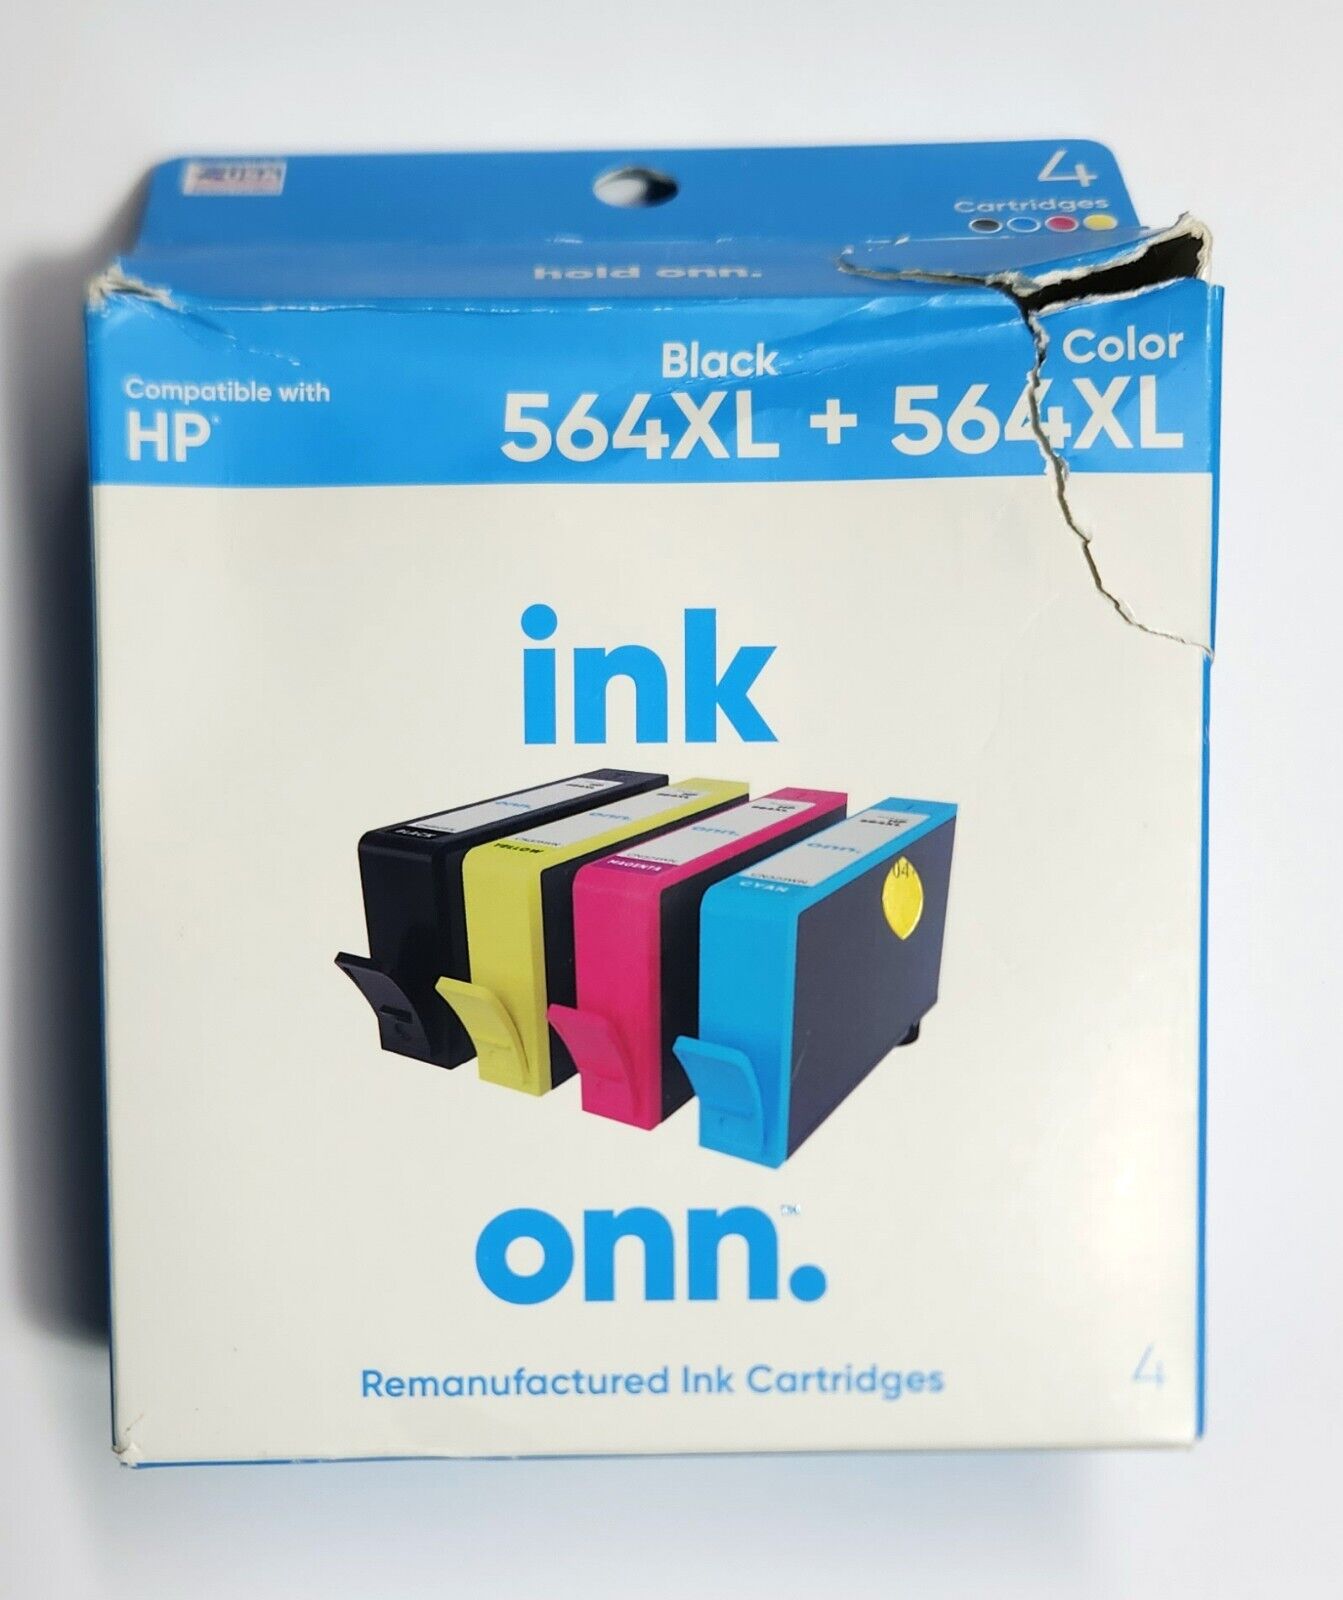 onn. HP 564XL Black and 564XL Tri-Color Reman Ink Cartridges, 4 Pack